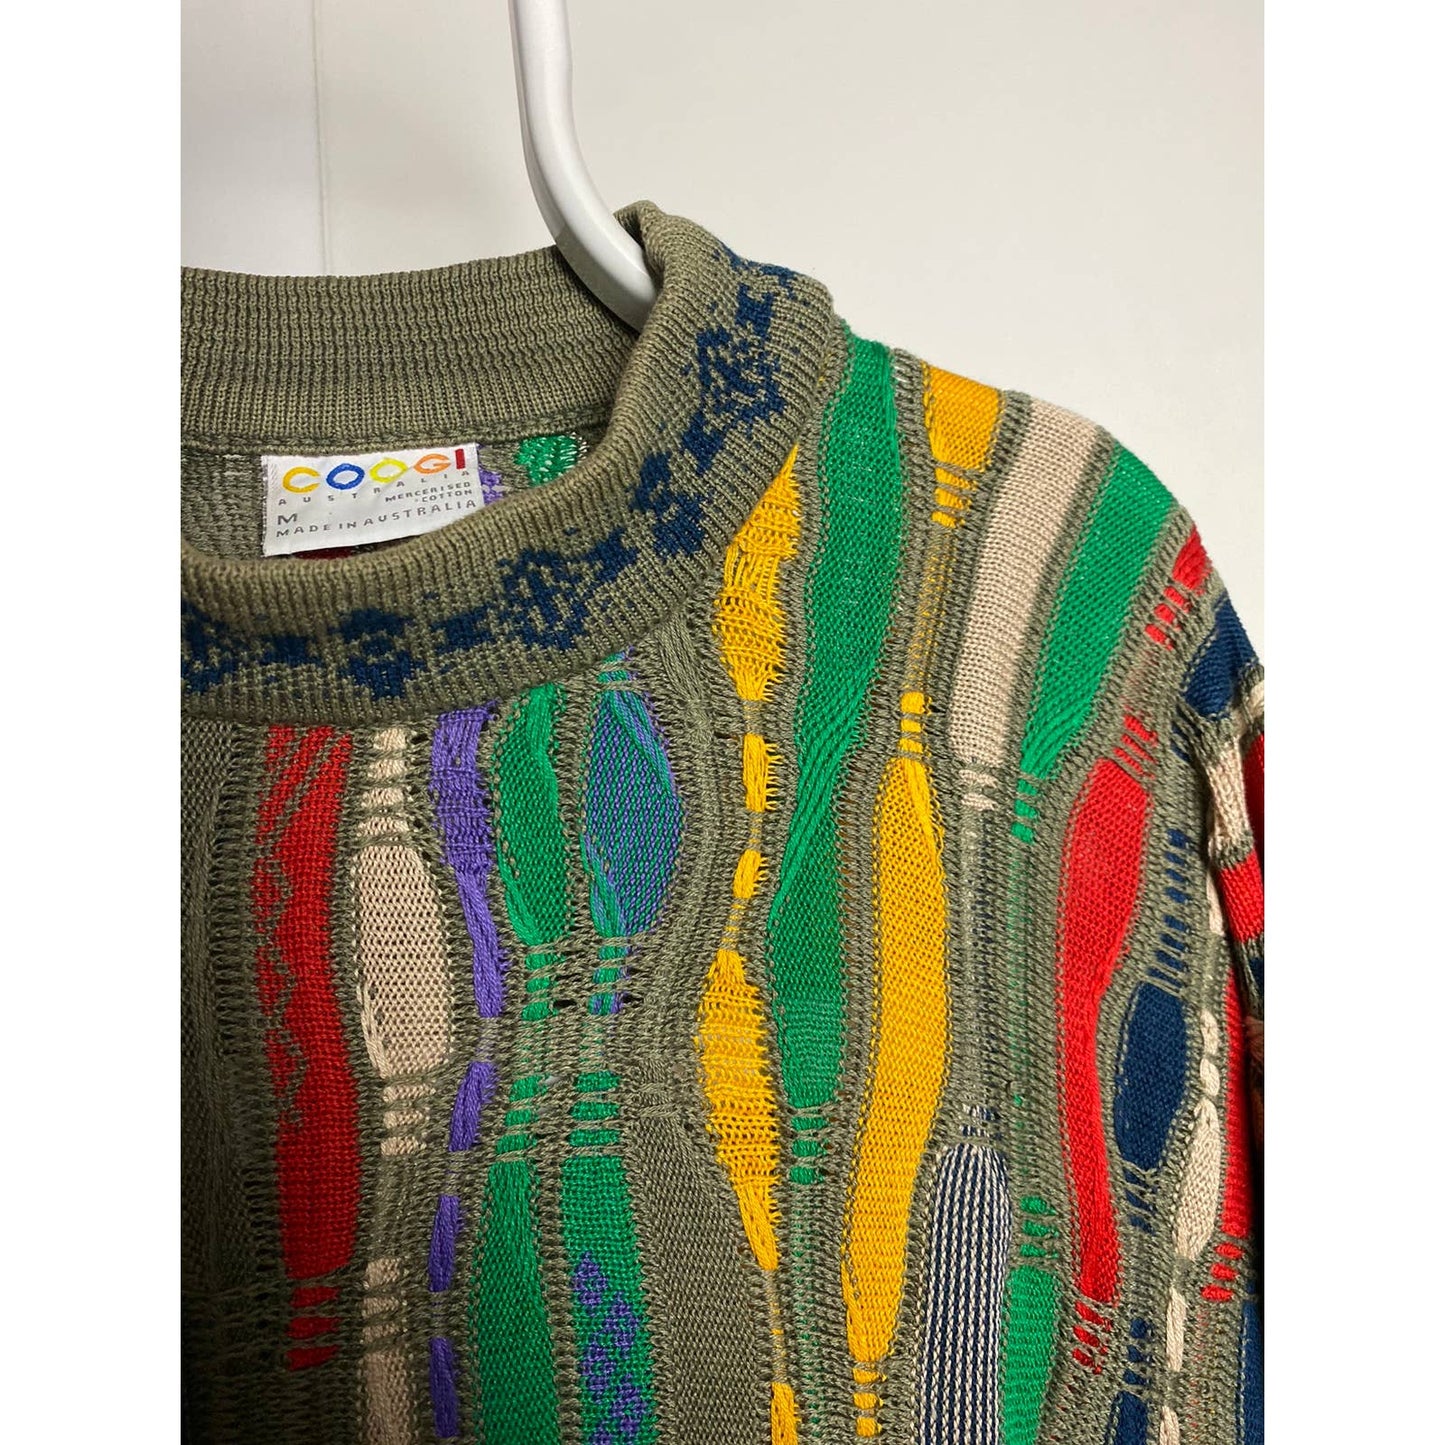 Coogi sweater vintage blue cable knit multicolor khaki green